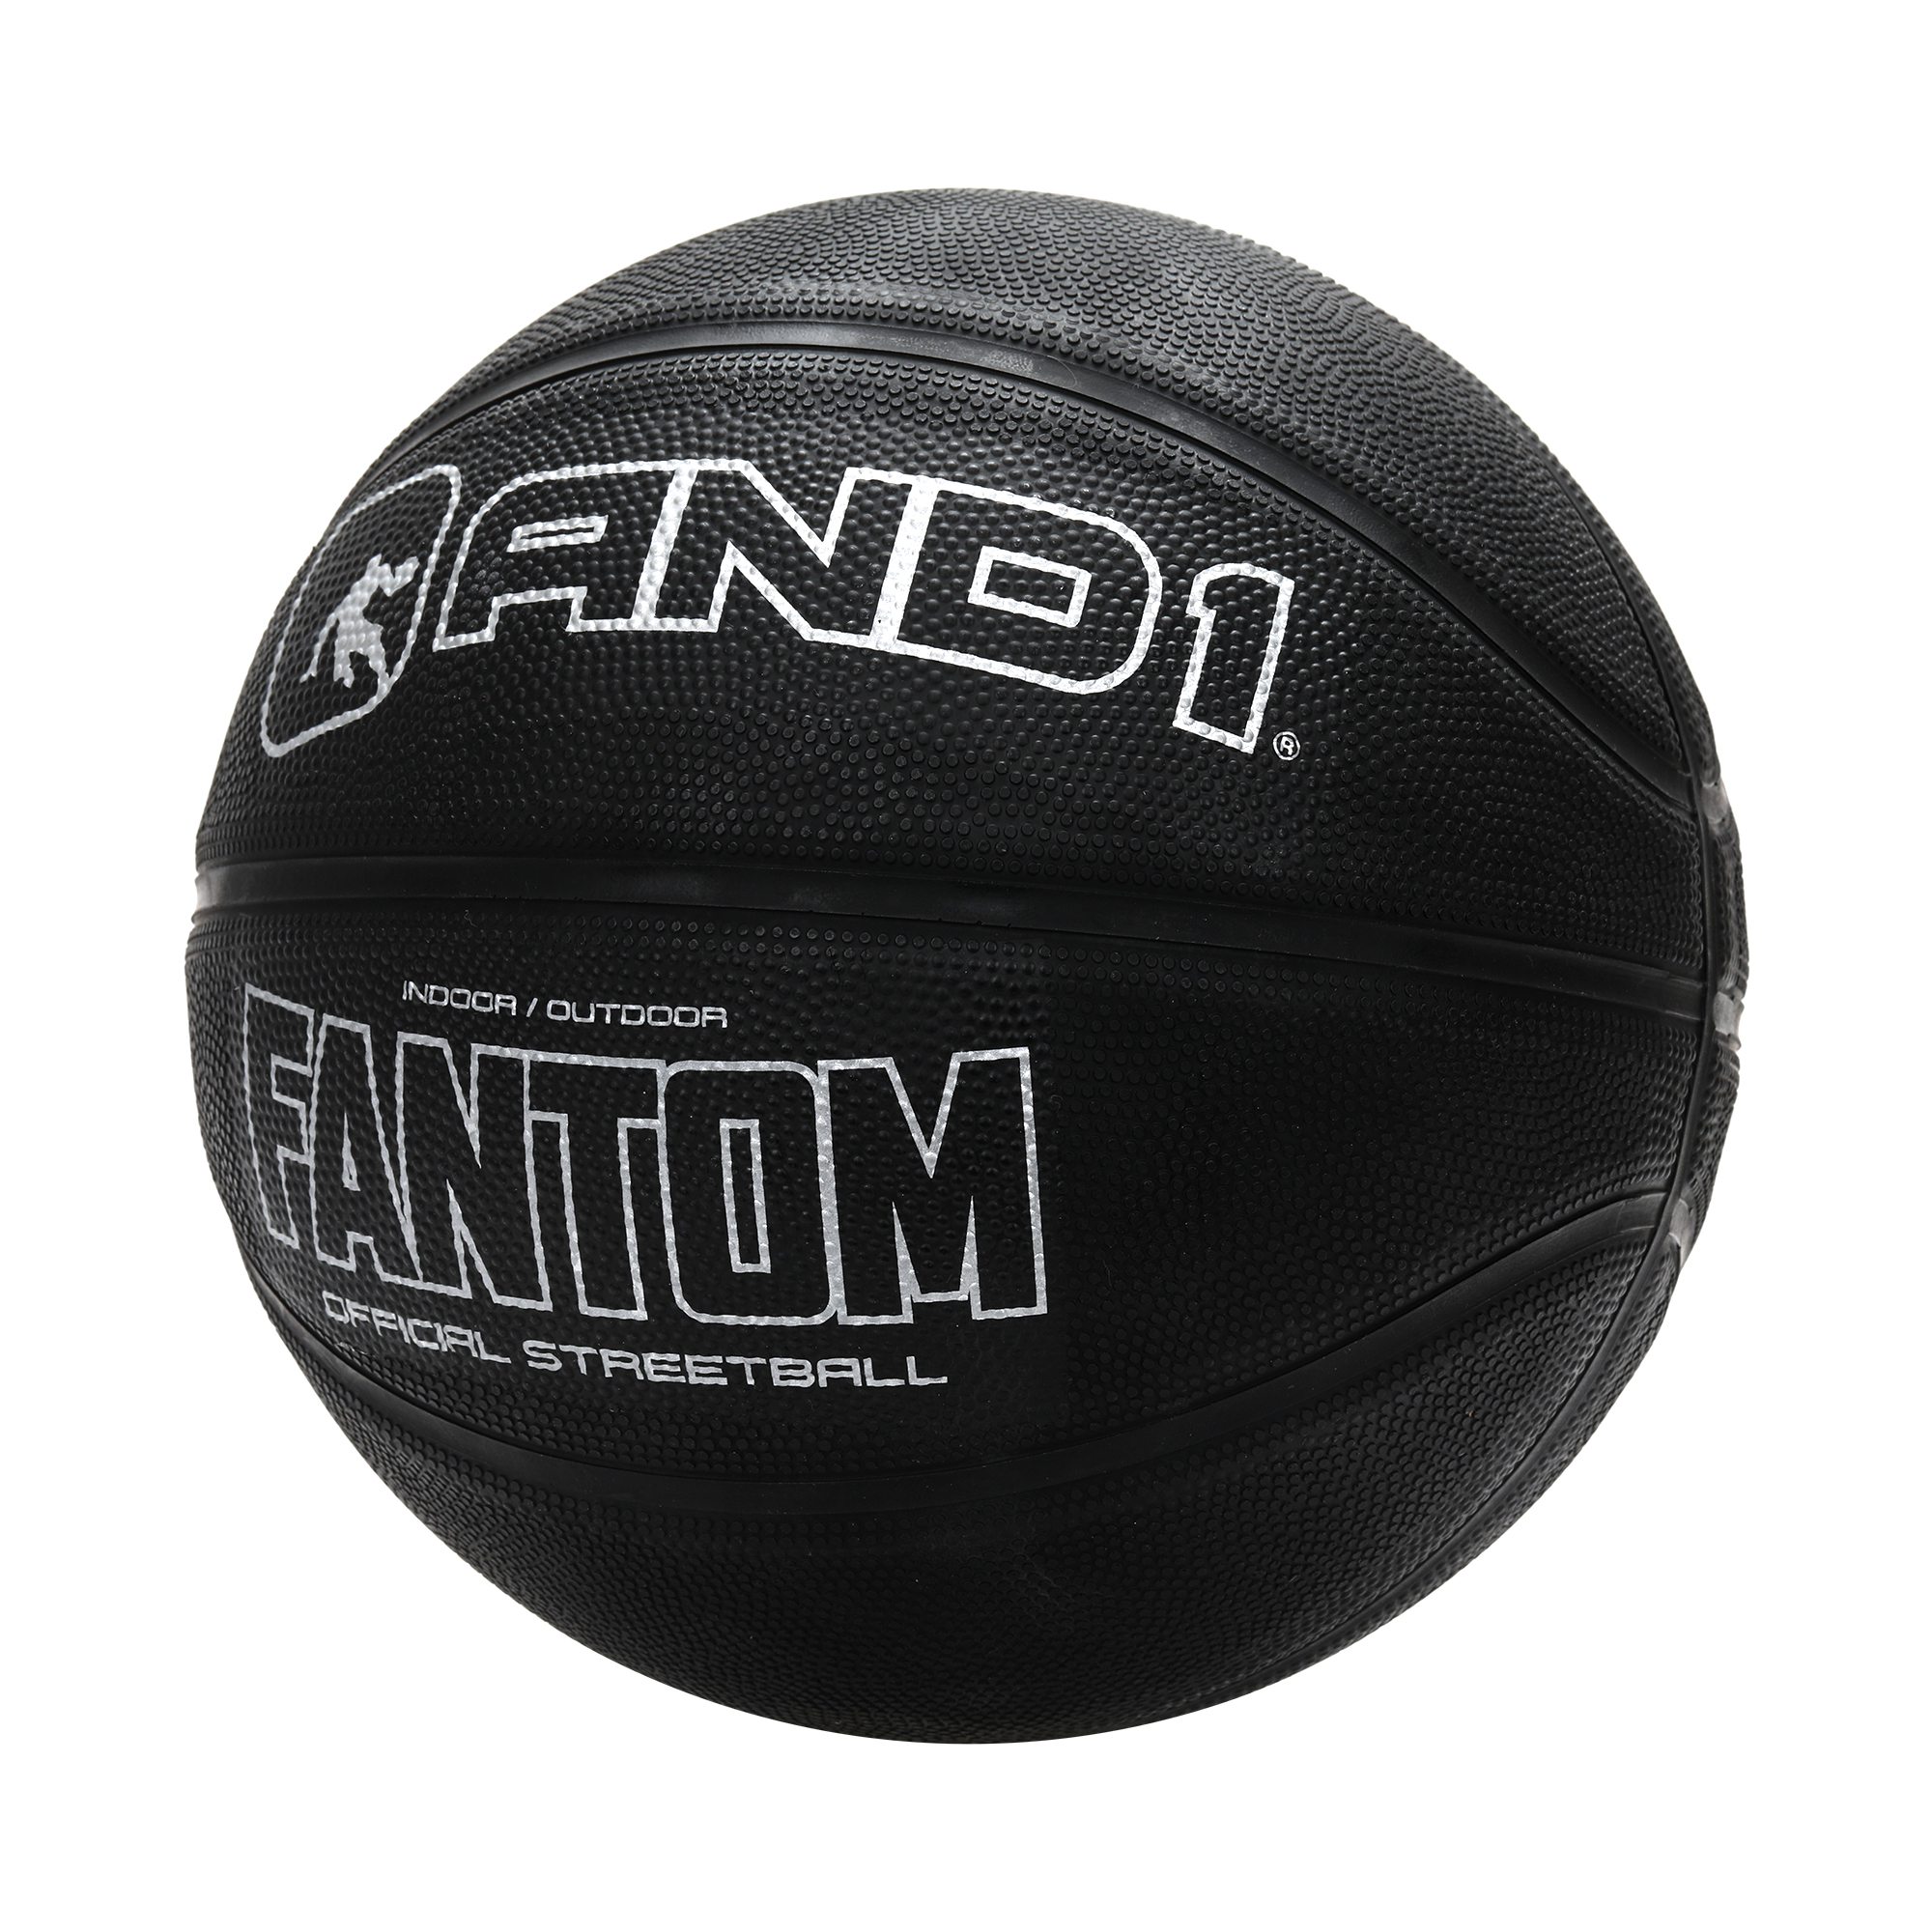 AND1 Fantom Rubber Basketball, Black, 29.5" - image 2 of 5